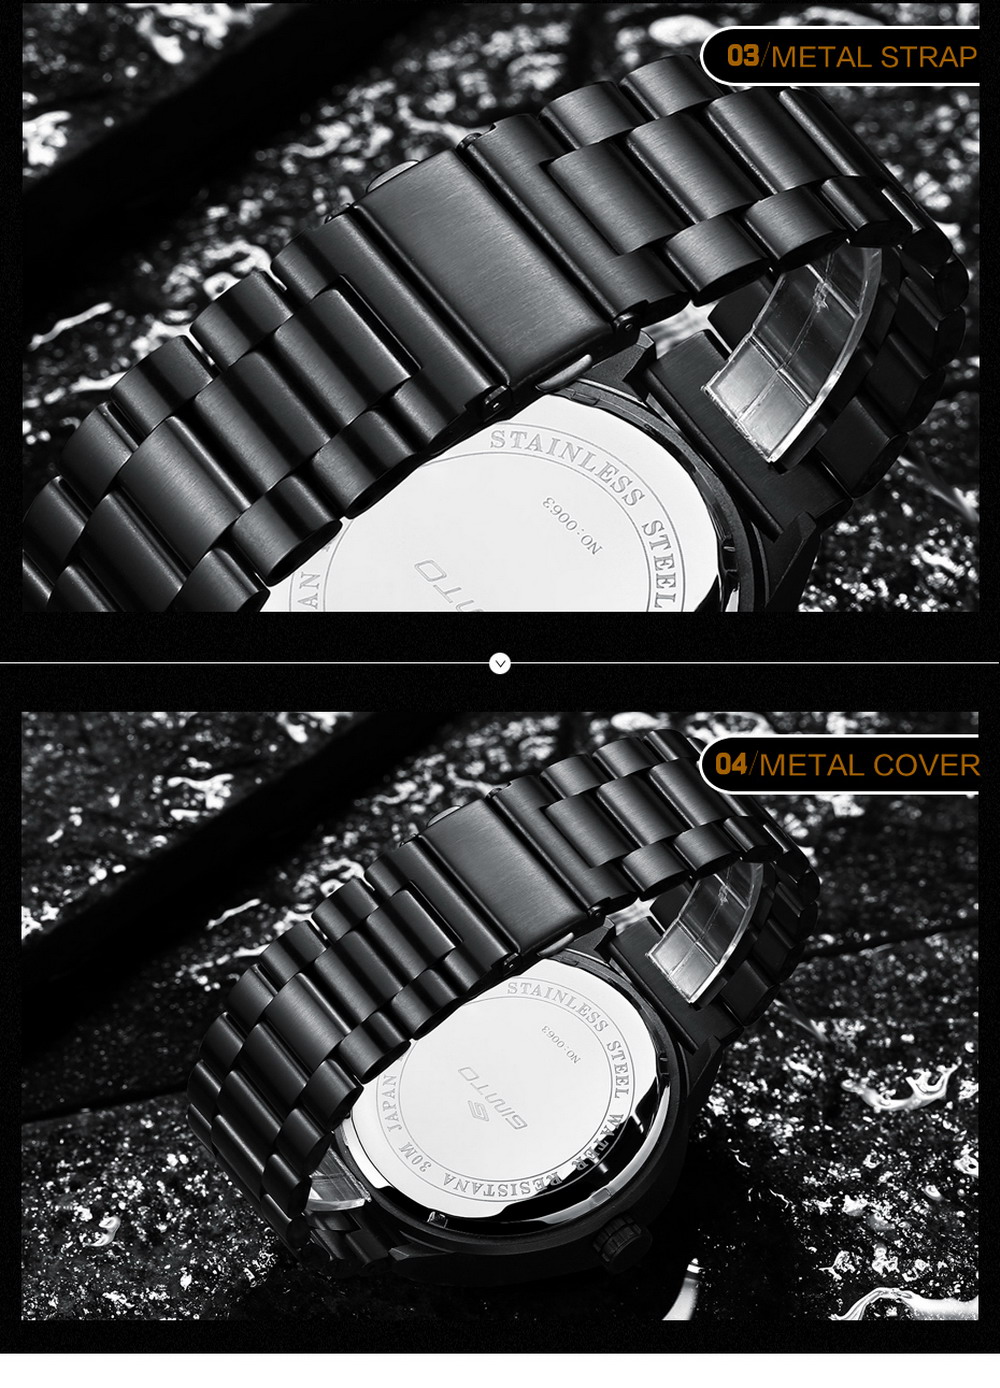 GIMTO Brand NEW Creative Men Watch Luxury Black Steel Quartz Clock Male Boy Military Wrist Watches